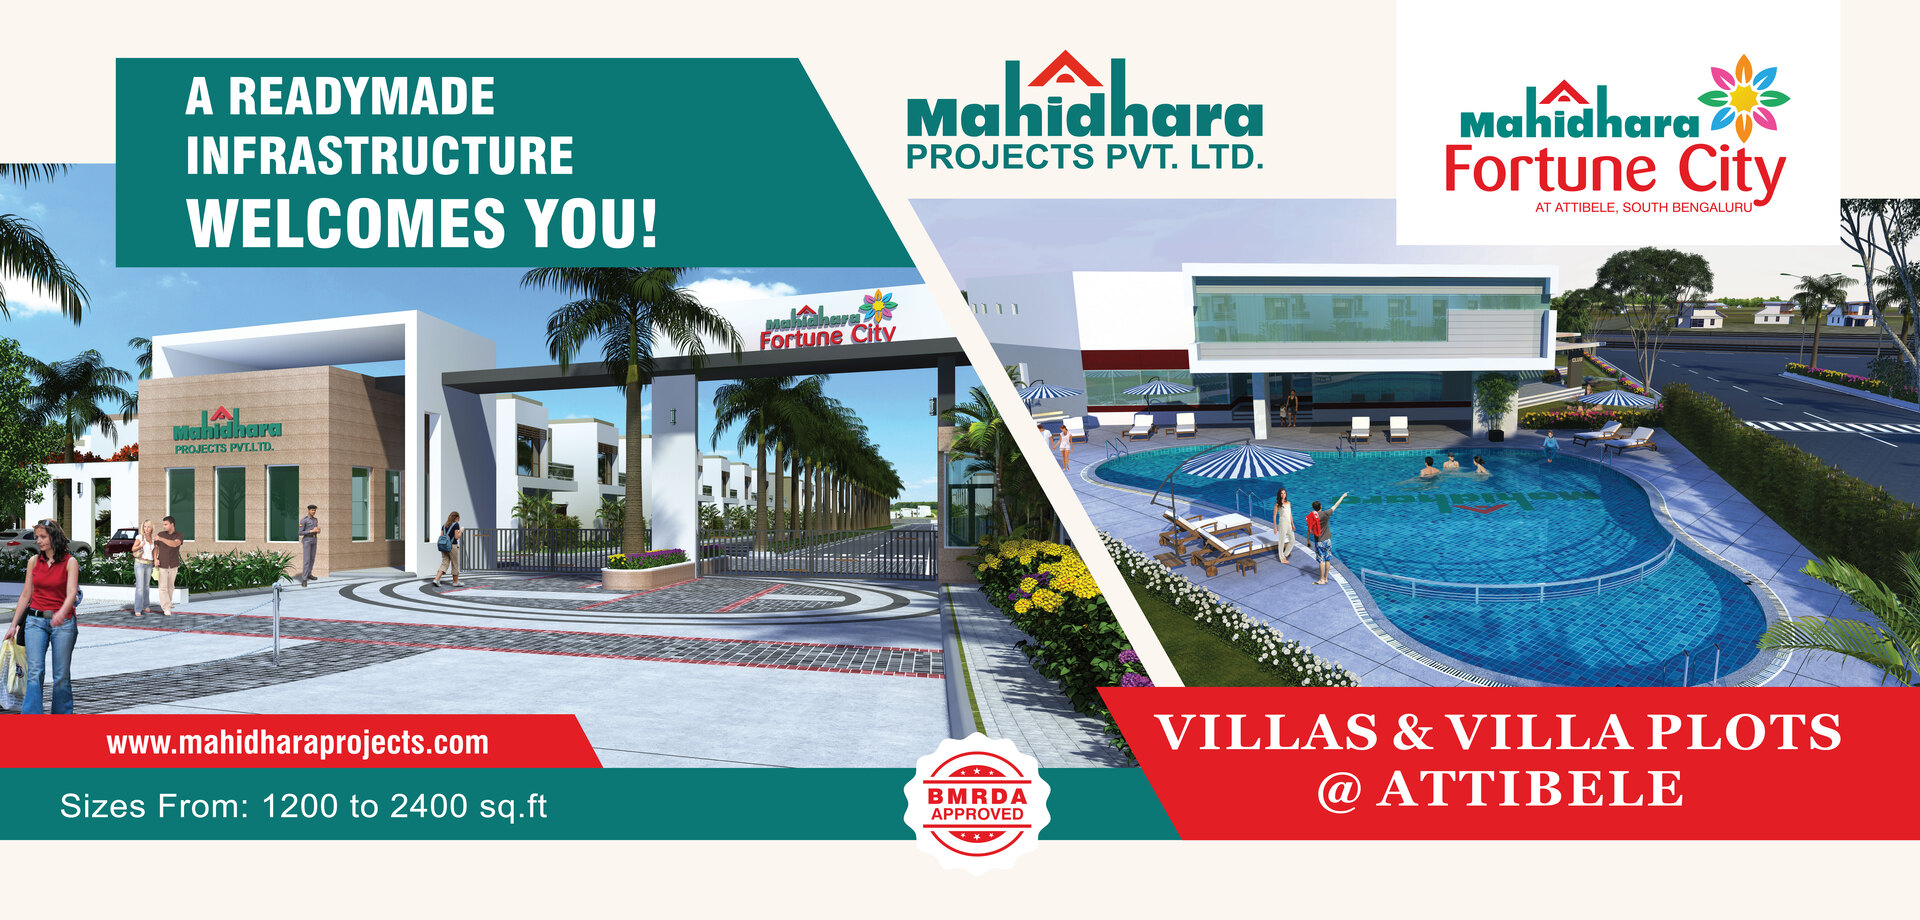 Mahidhara Fortune City - Villa plots in Attibele